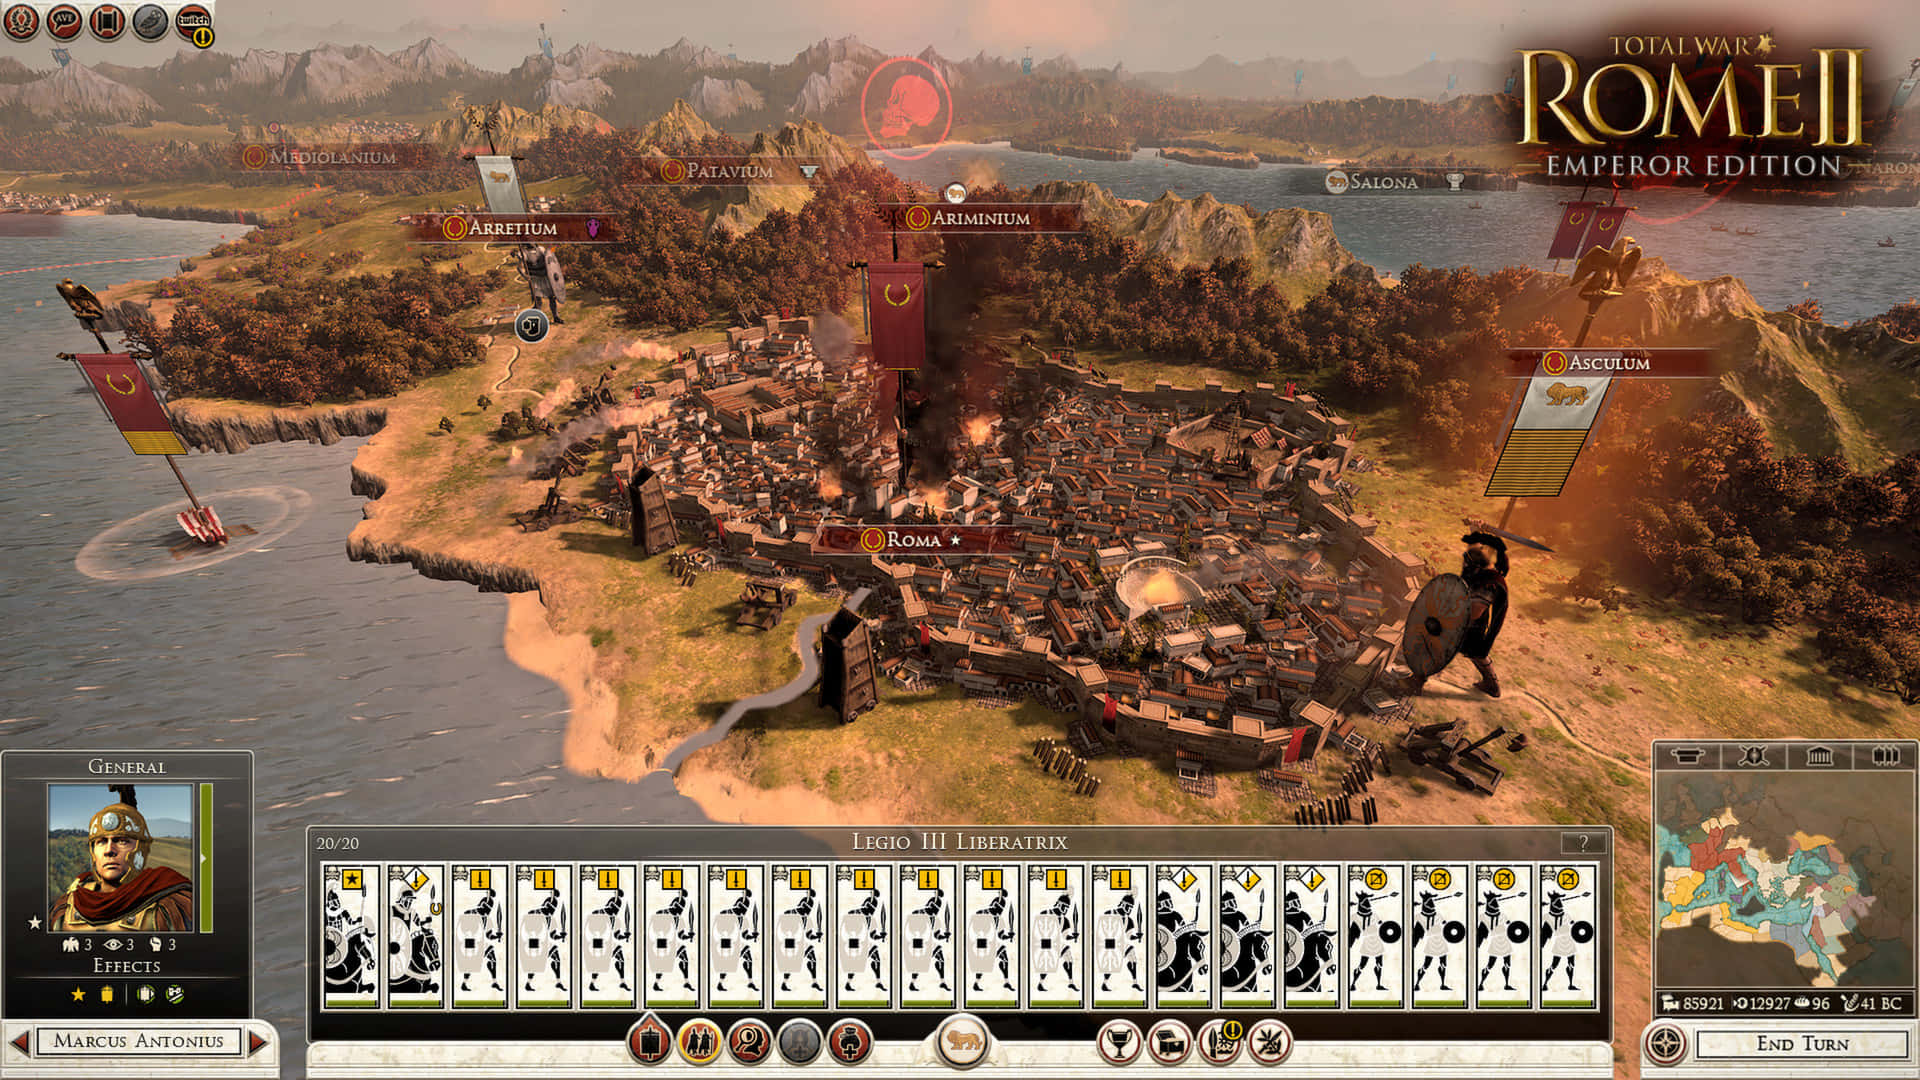 "Sharp Tactics and Strategies In Total War Rome 2"